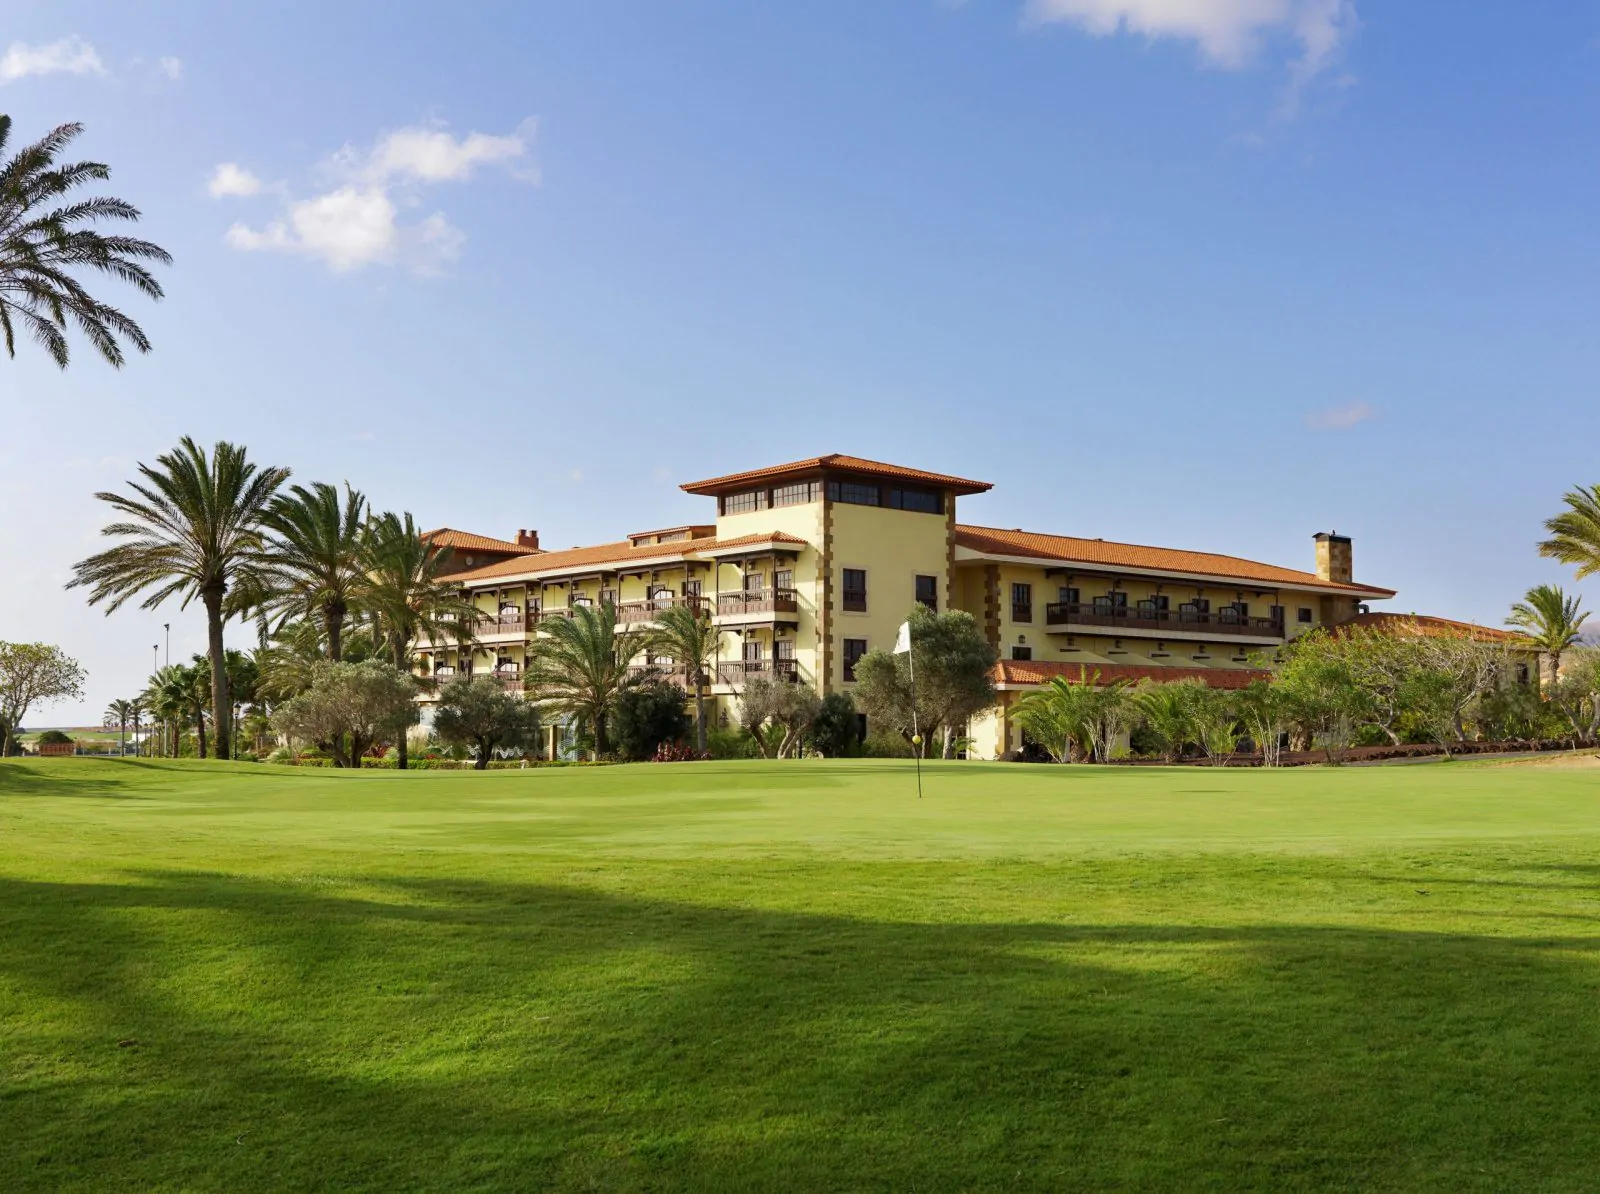 Hotel Campo de Golf Hotel Golf Course scaled